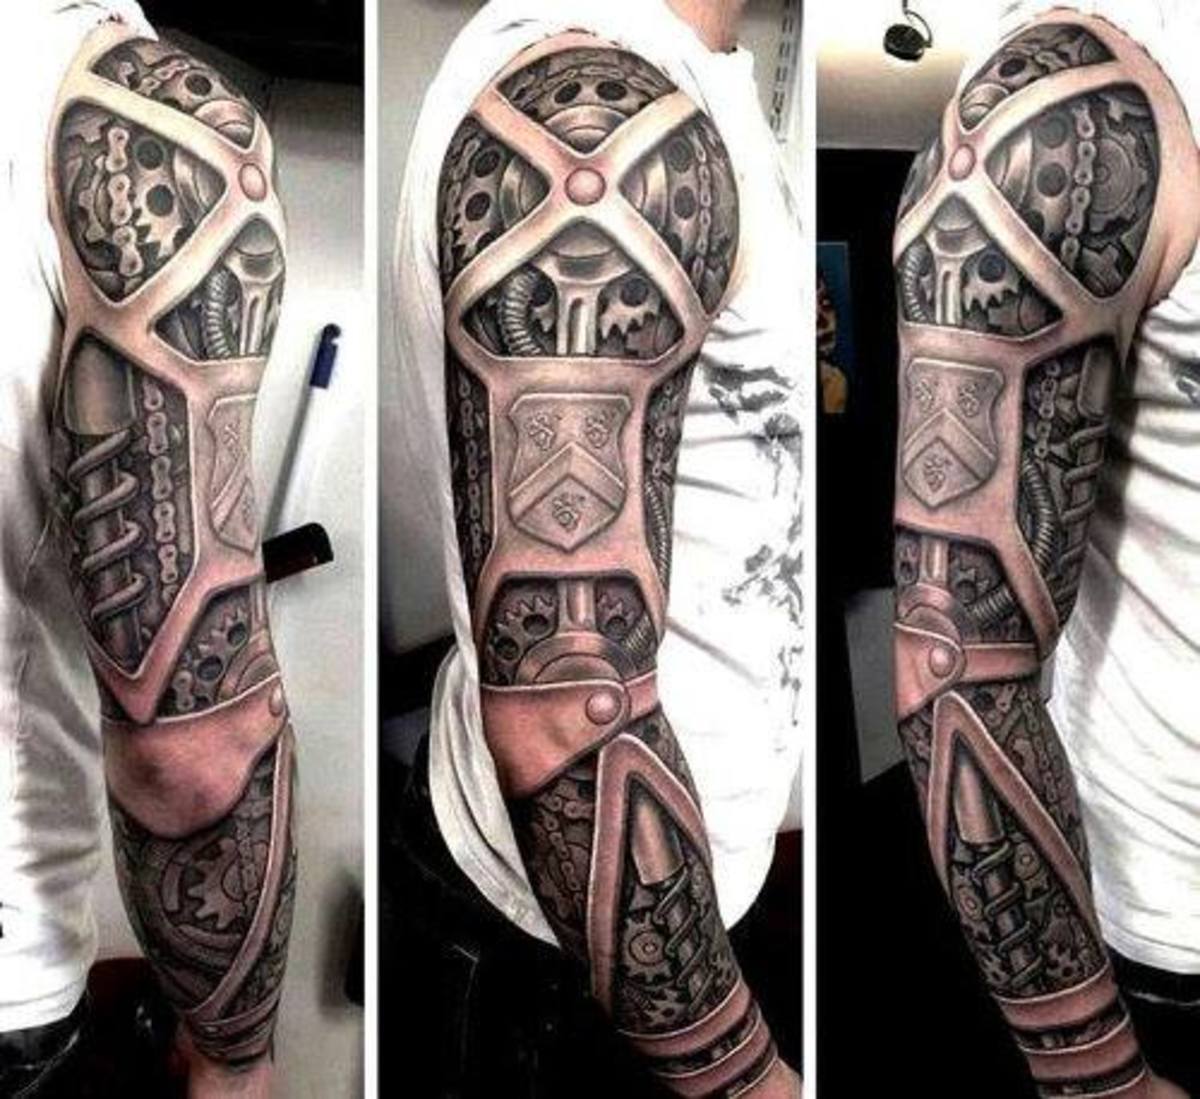 Biomechanic arm tattoo